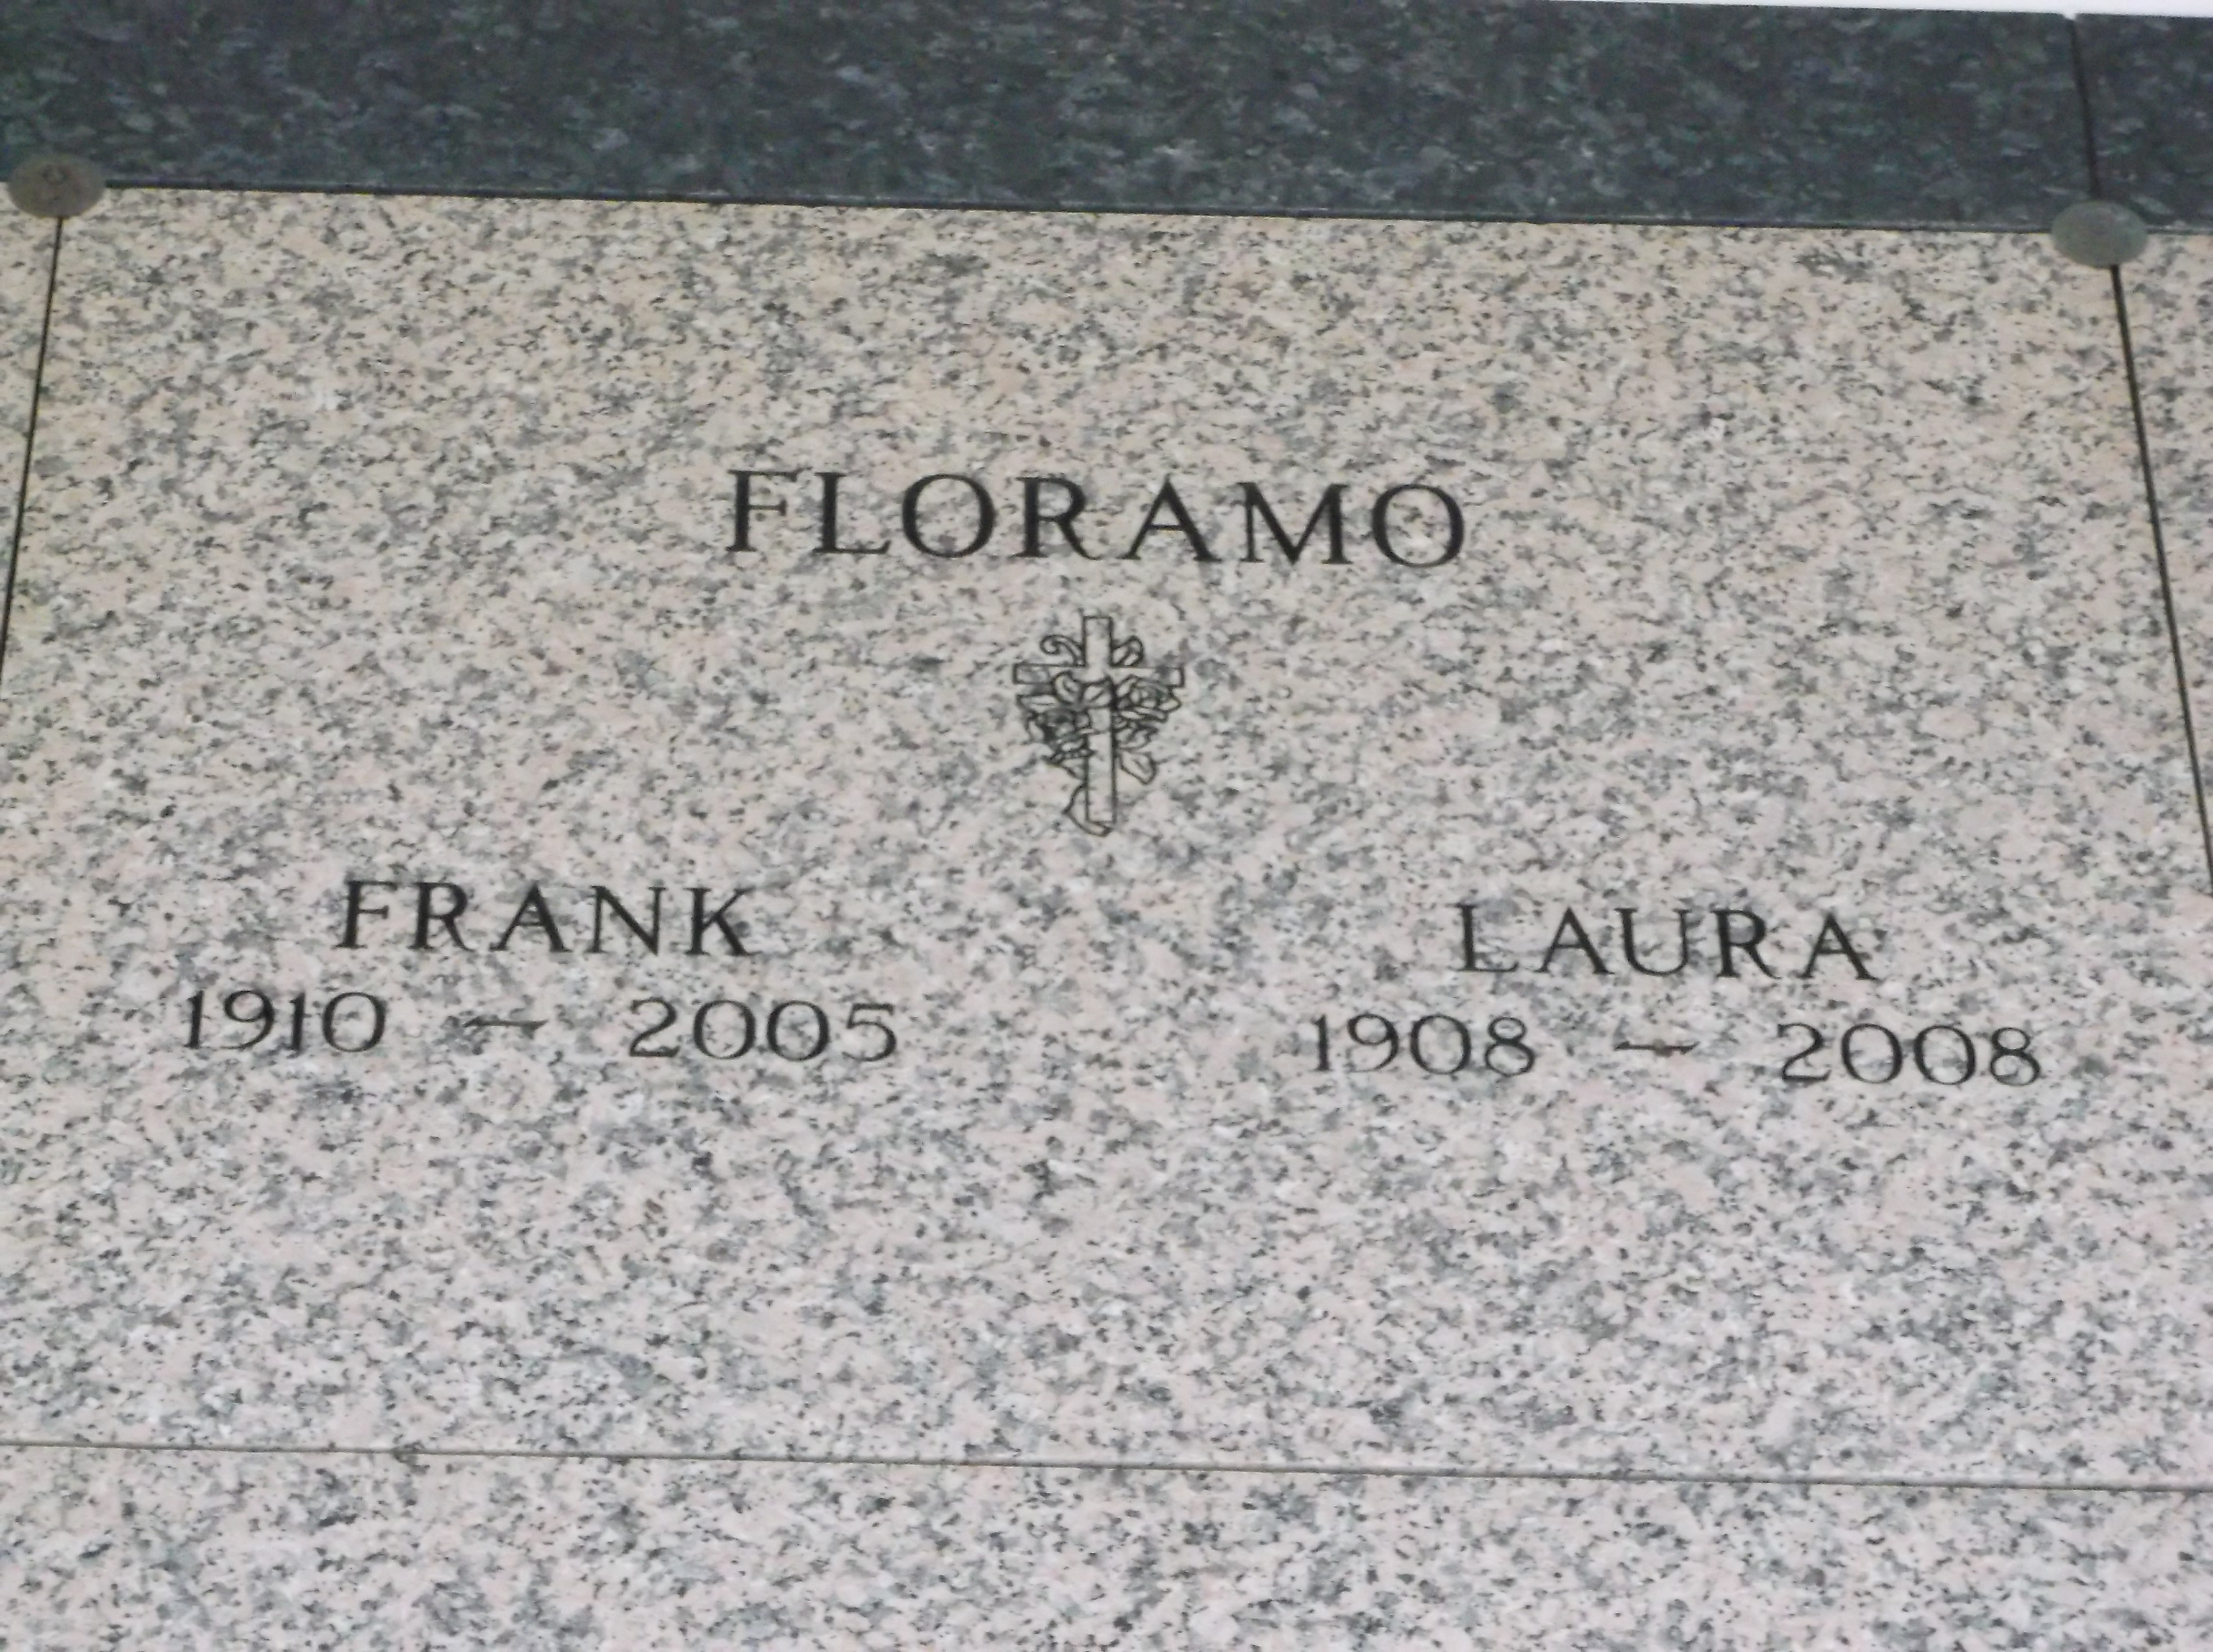 Frank Floramo